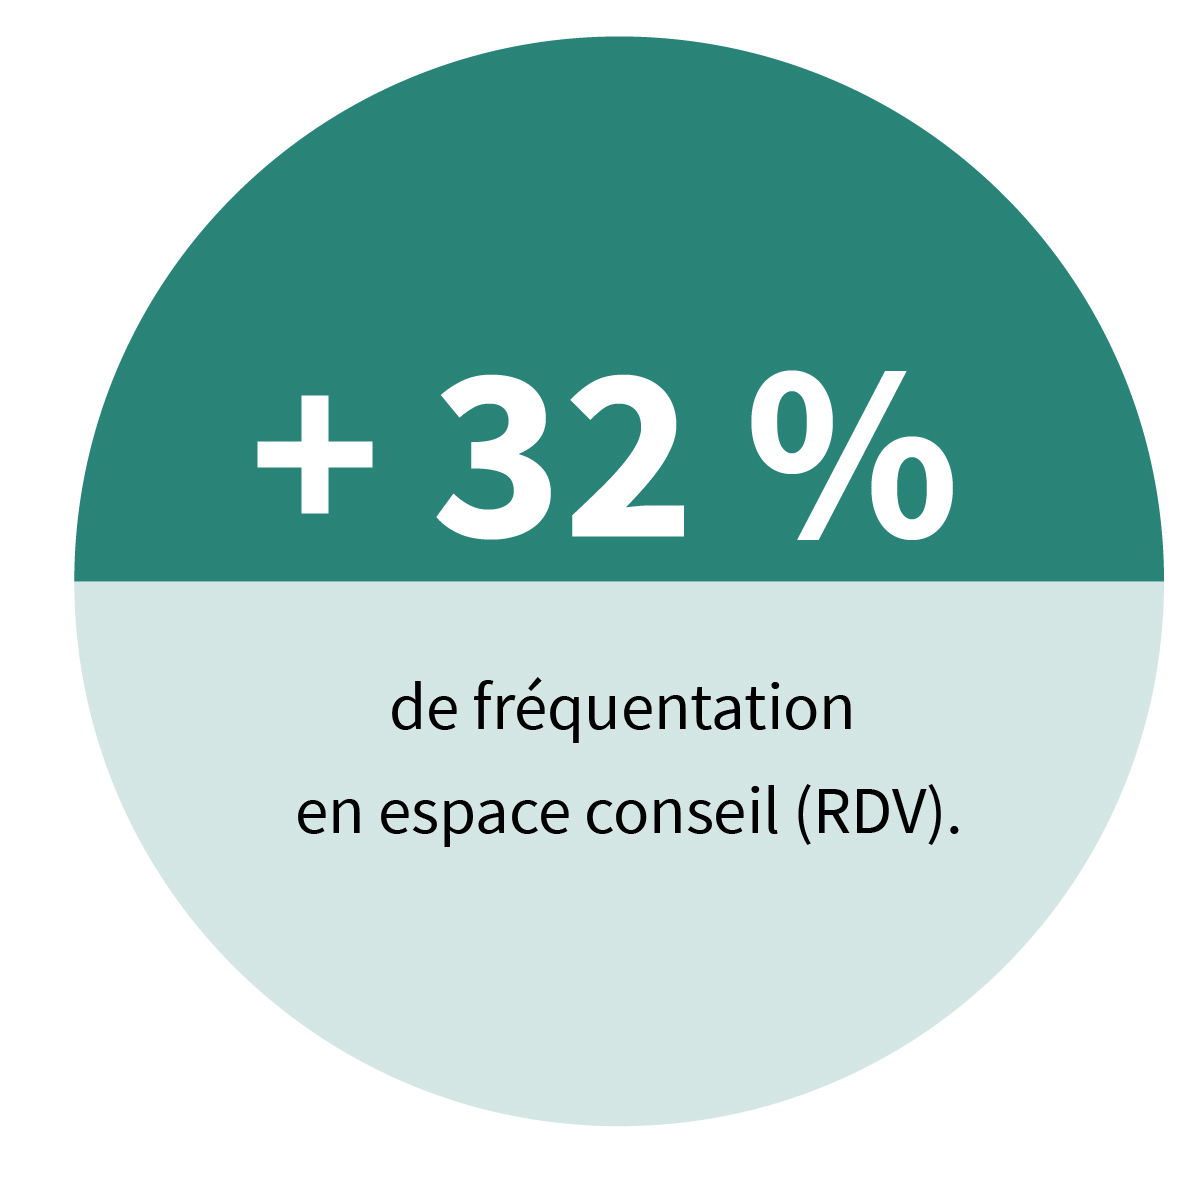 + 32 % de fréquentation en espace conseil (RDV).